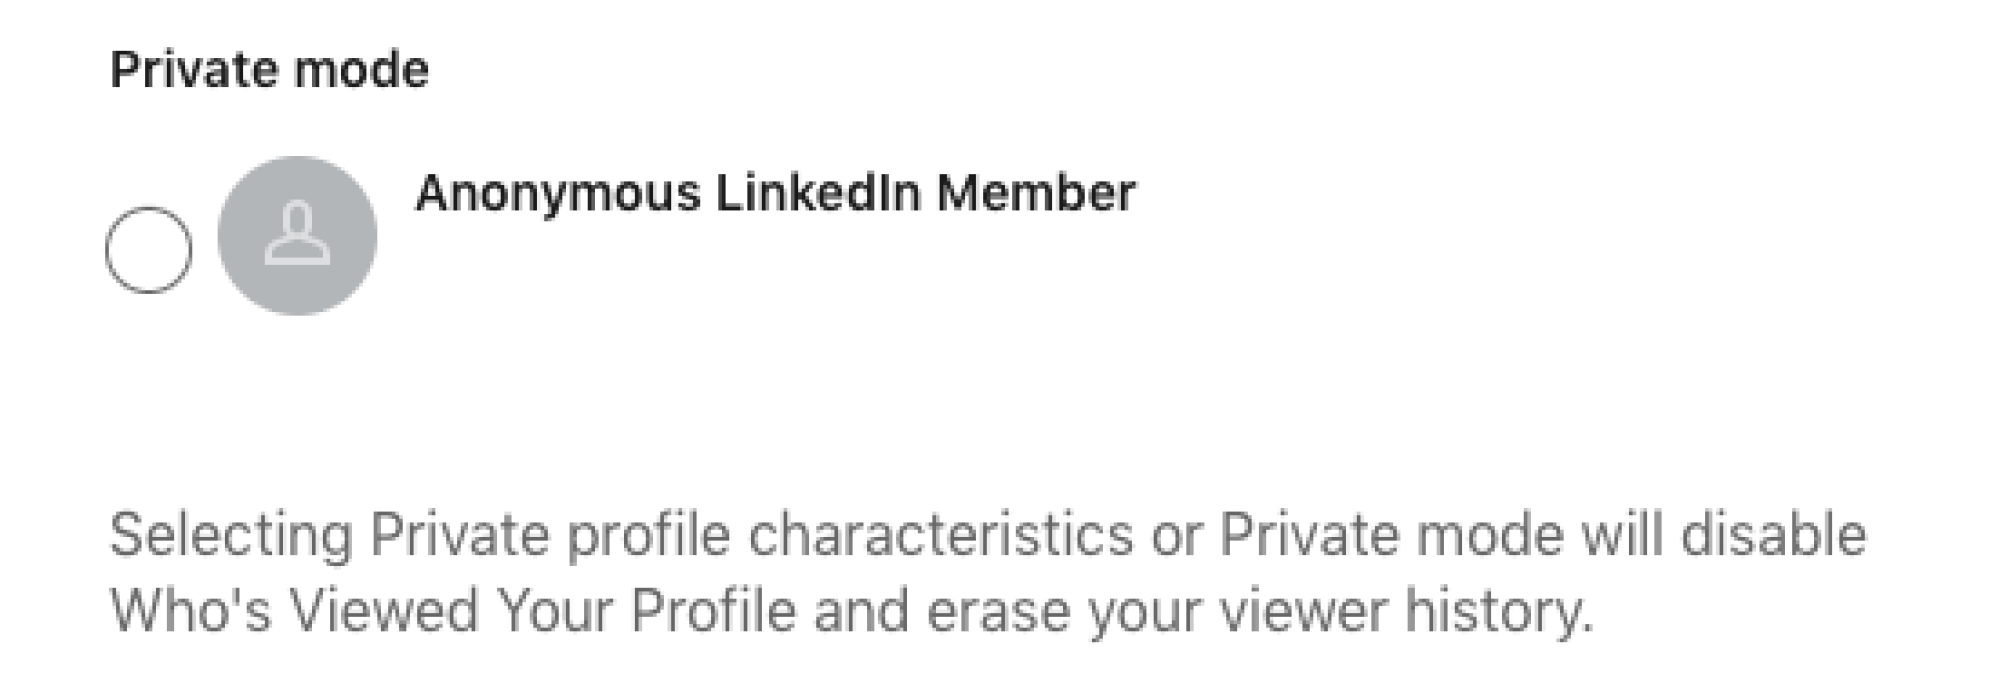 Screenshot of LinkedIn's "Private Mode" setting